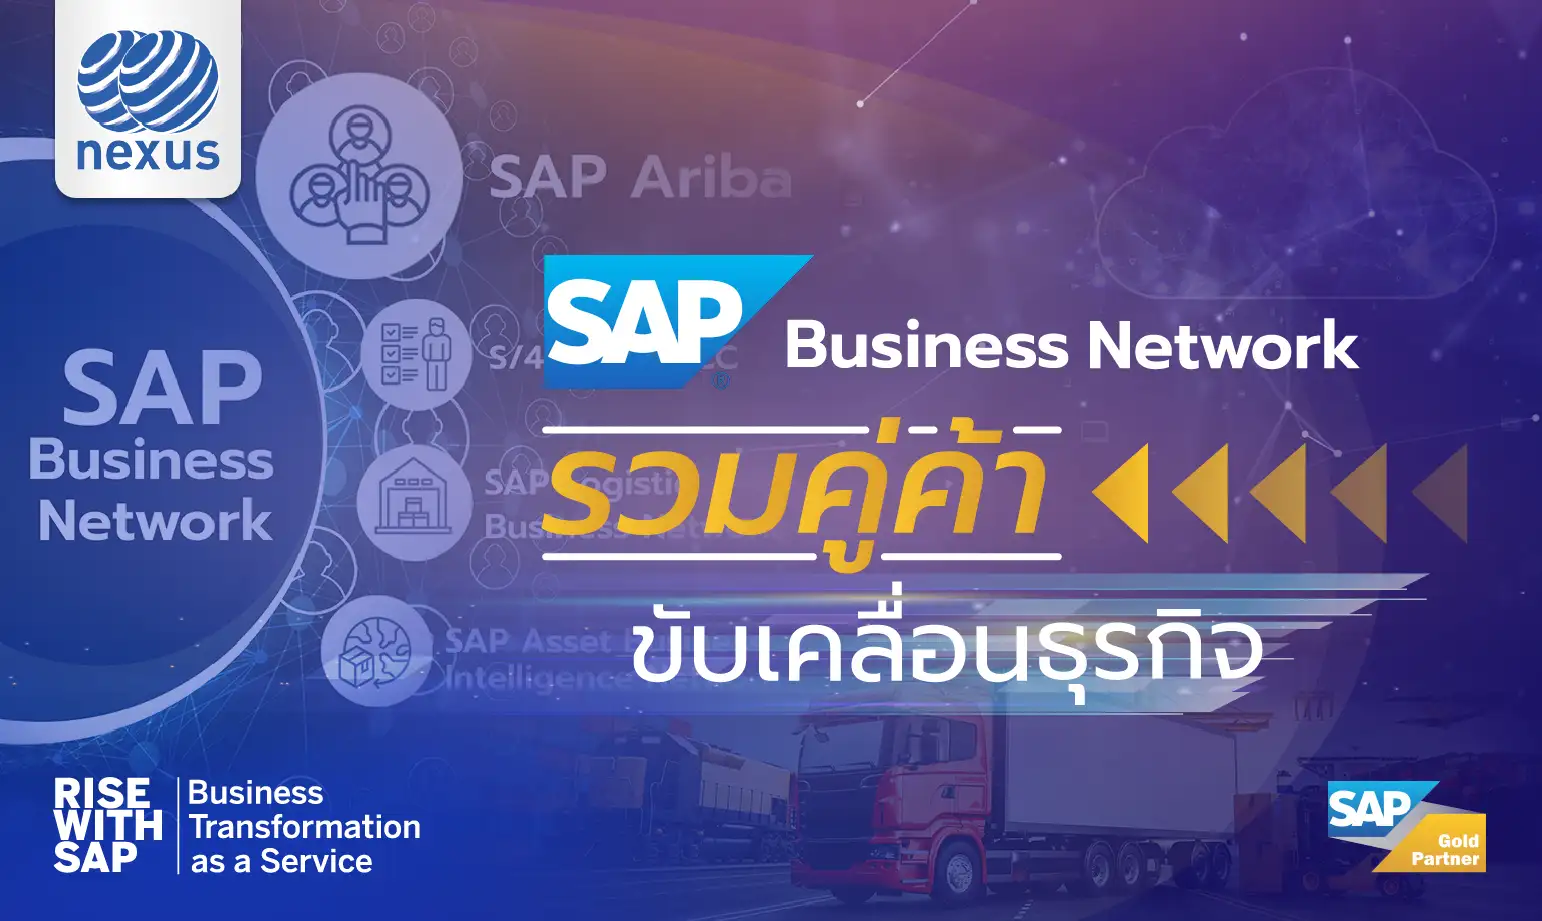 SAP Business Network